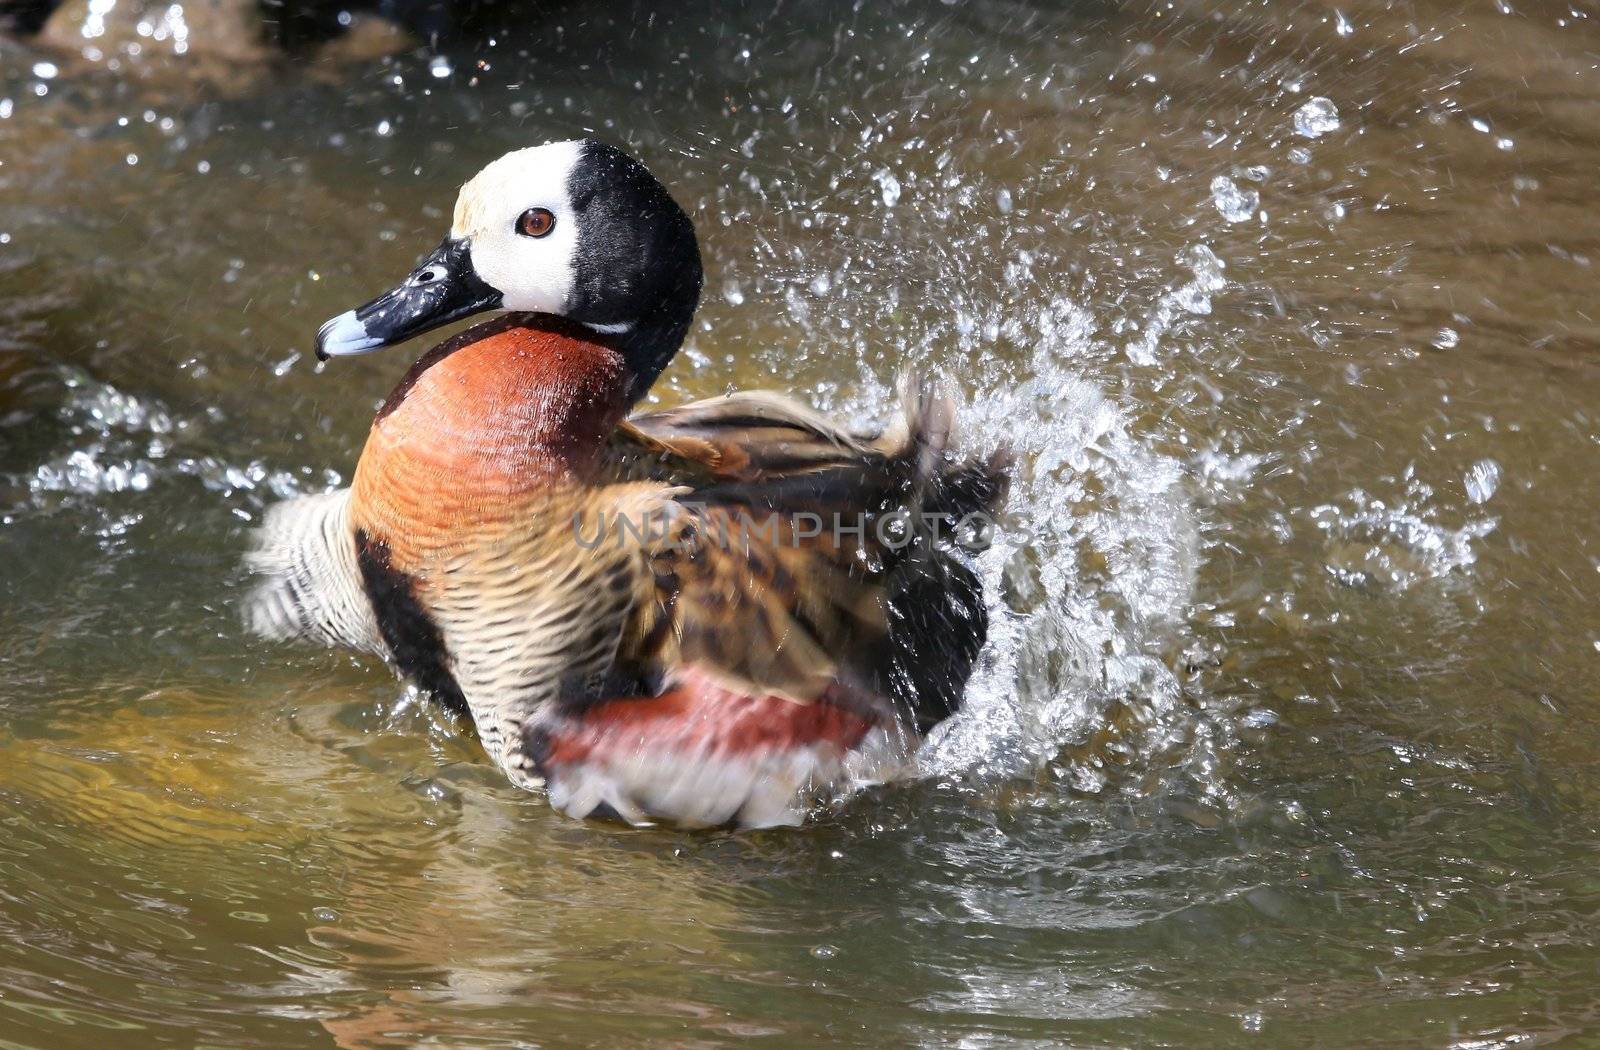 Pretty duck splashing in water to clean itself